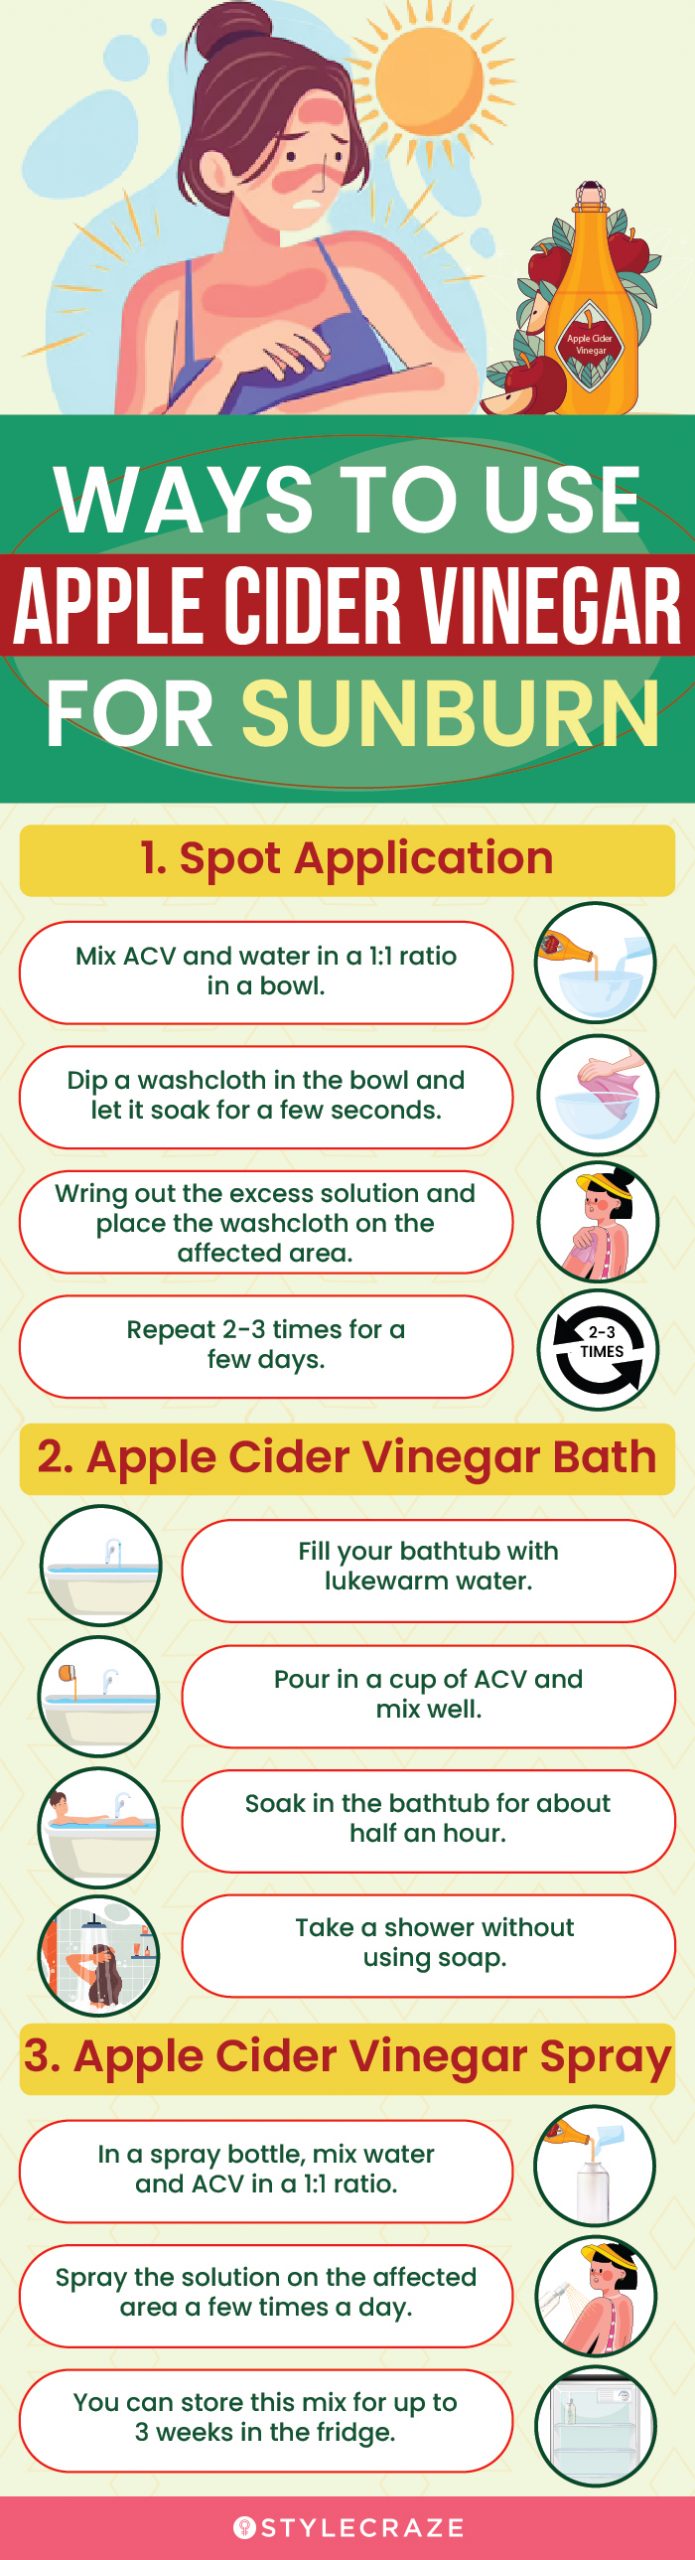 ways to use apple cider vinegar for sunburn (infographic)